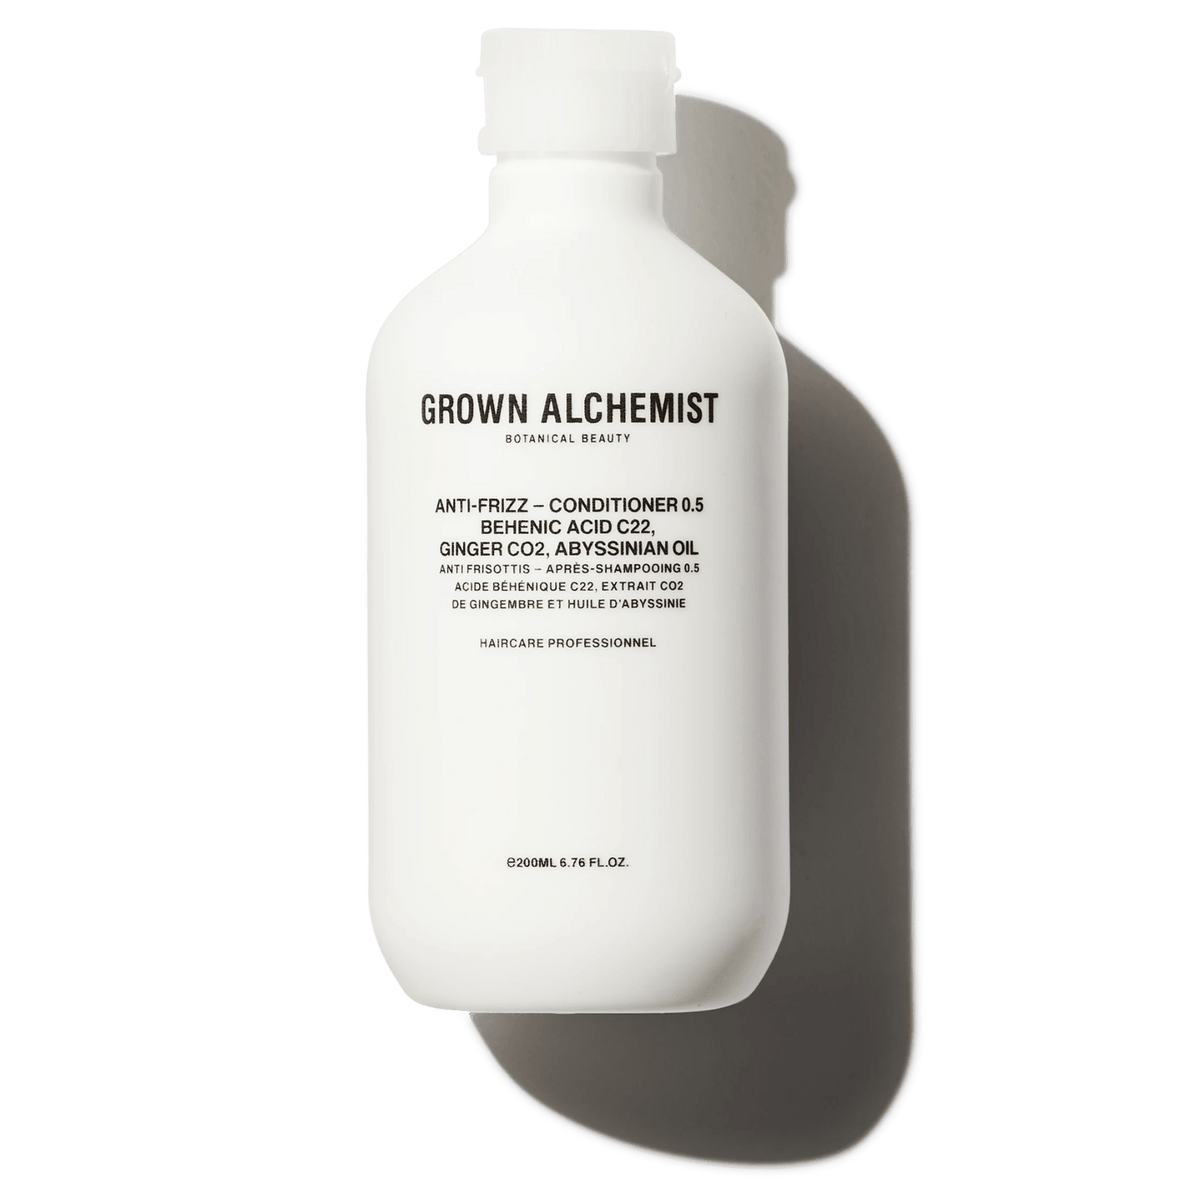 Grown Alchemist Anti-Frizz - Conditioner 0.5: Behenic Acid C22, Ginger CO2, Abyssinian Oil, 200ml